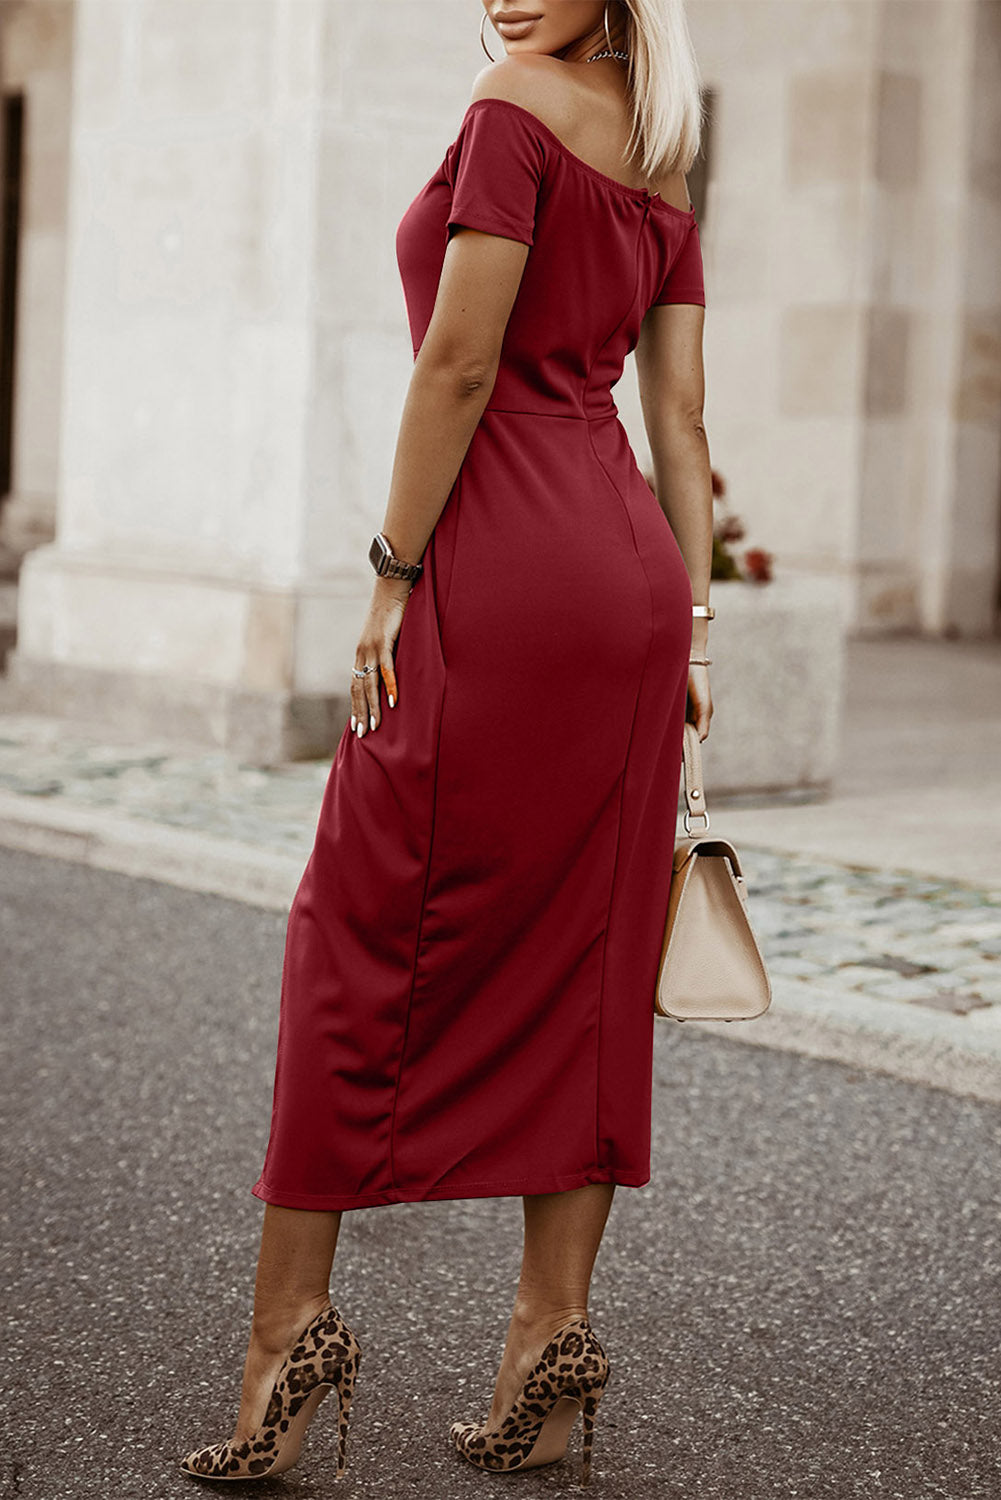 Stunning Off-Shoulder Short Sleeve Split Bodycon Dress